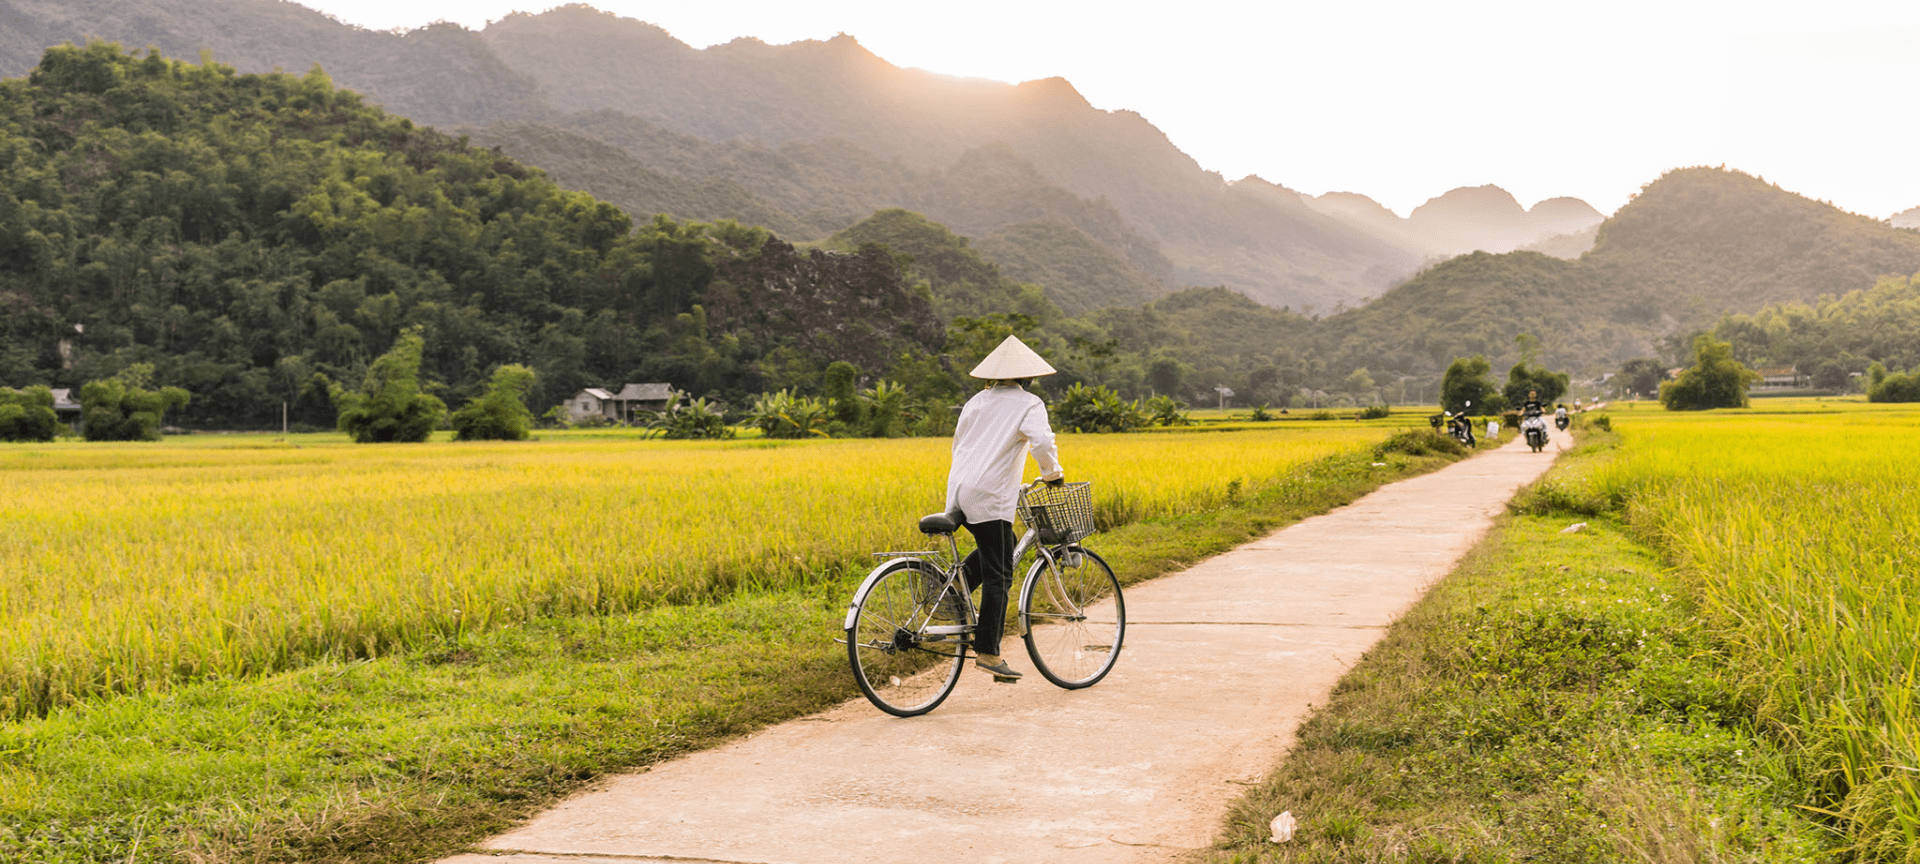 Vietnam Cycling Trip: Hanoi to Ho Chi Minh City